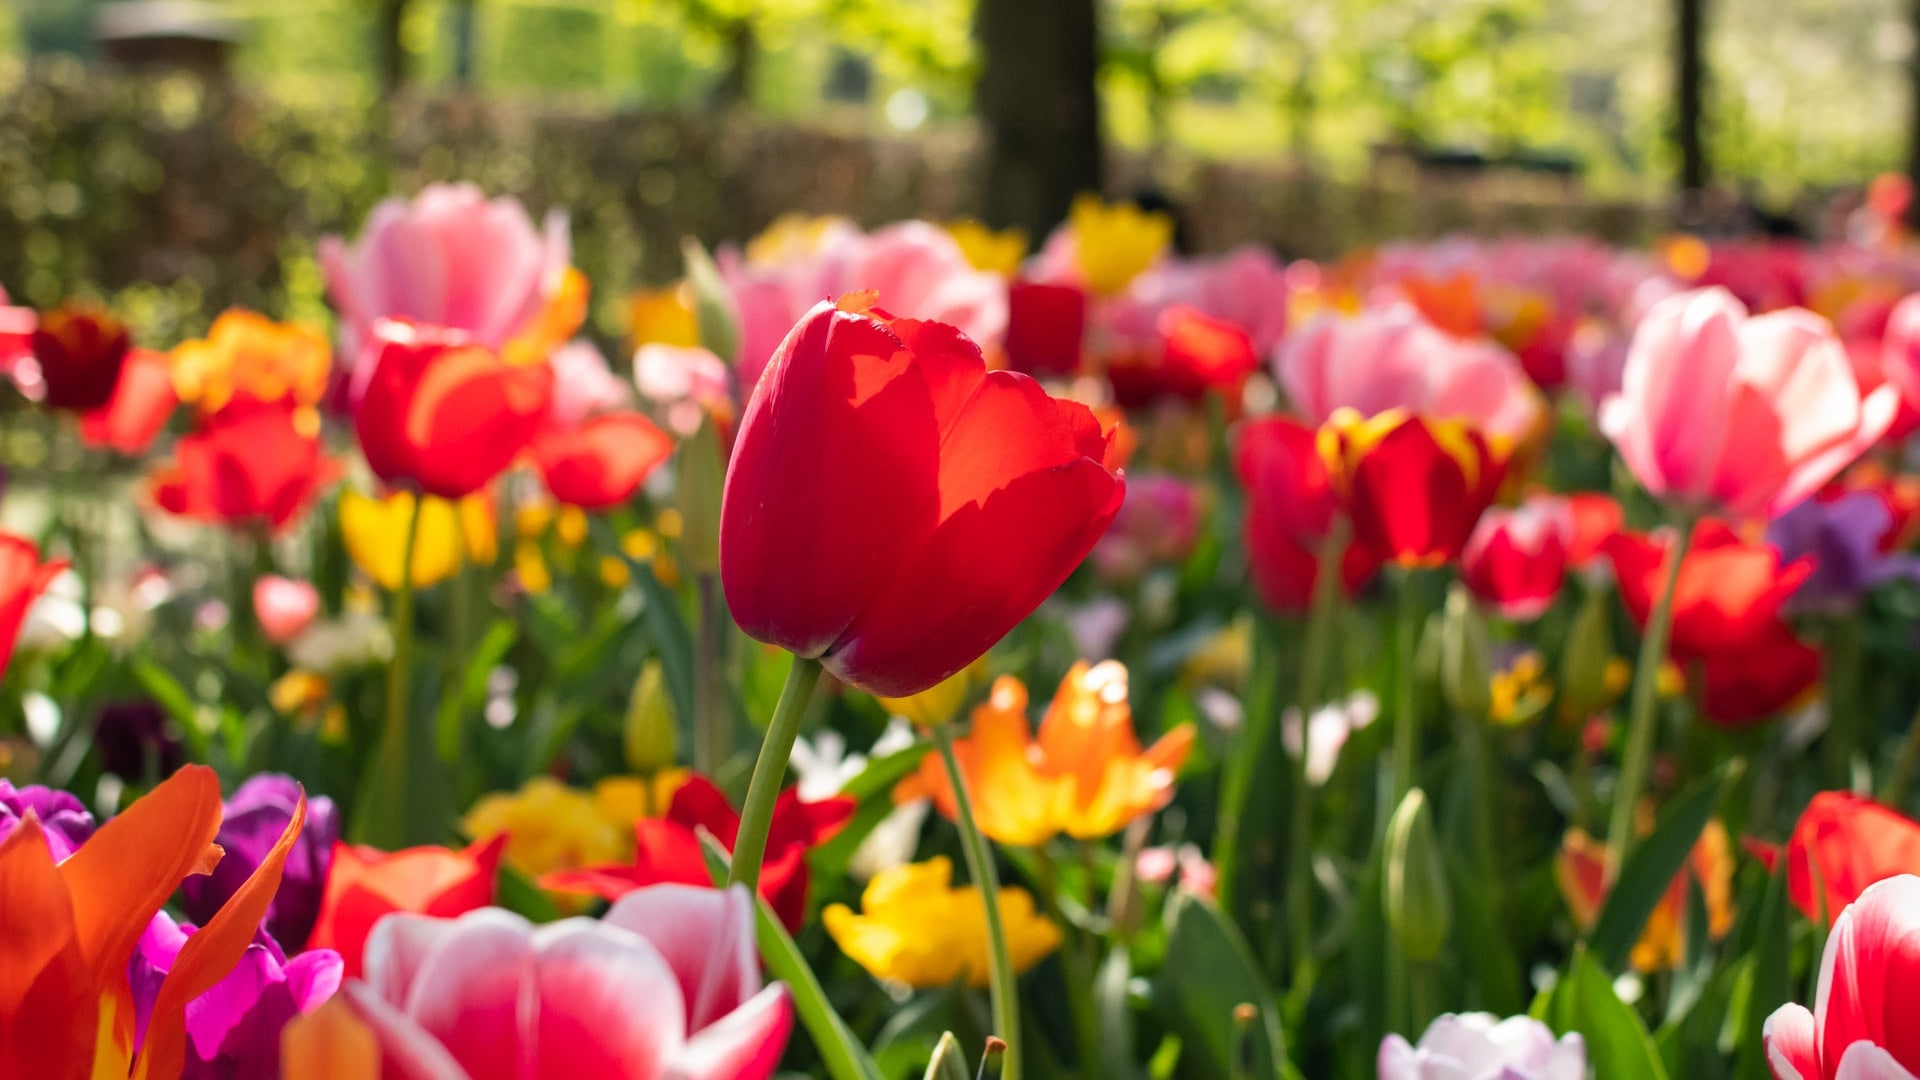 Are Tulips perennials?